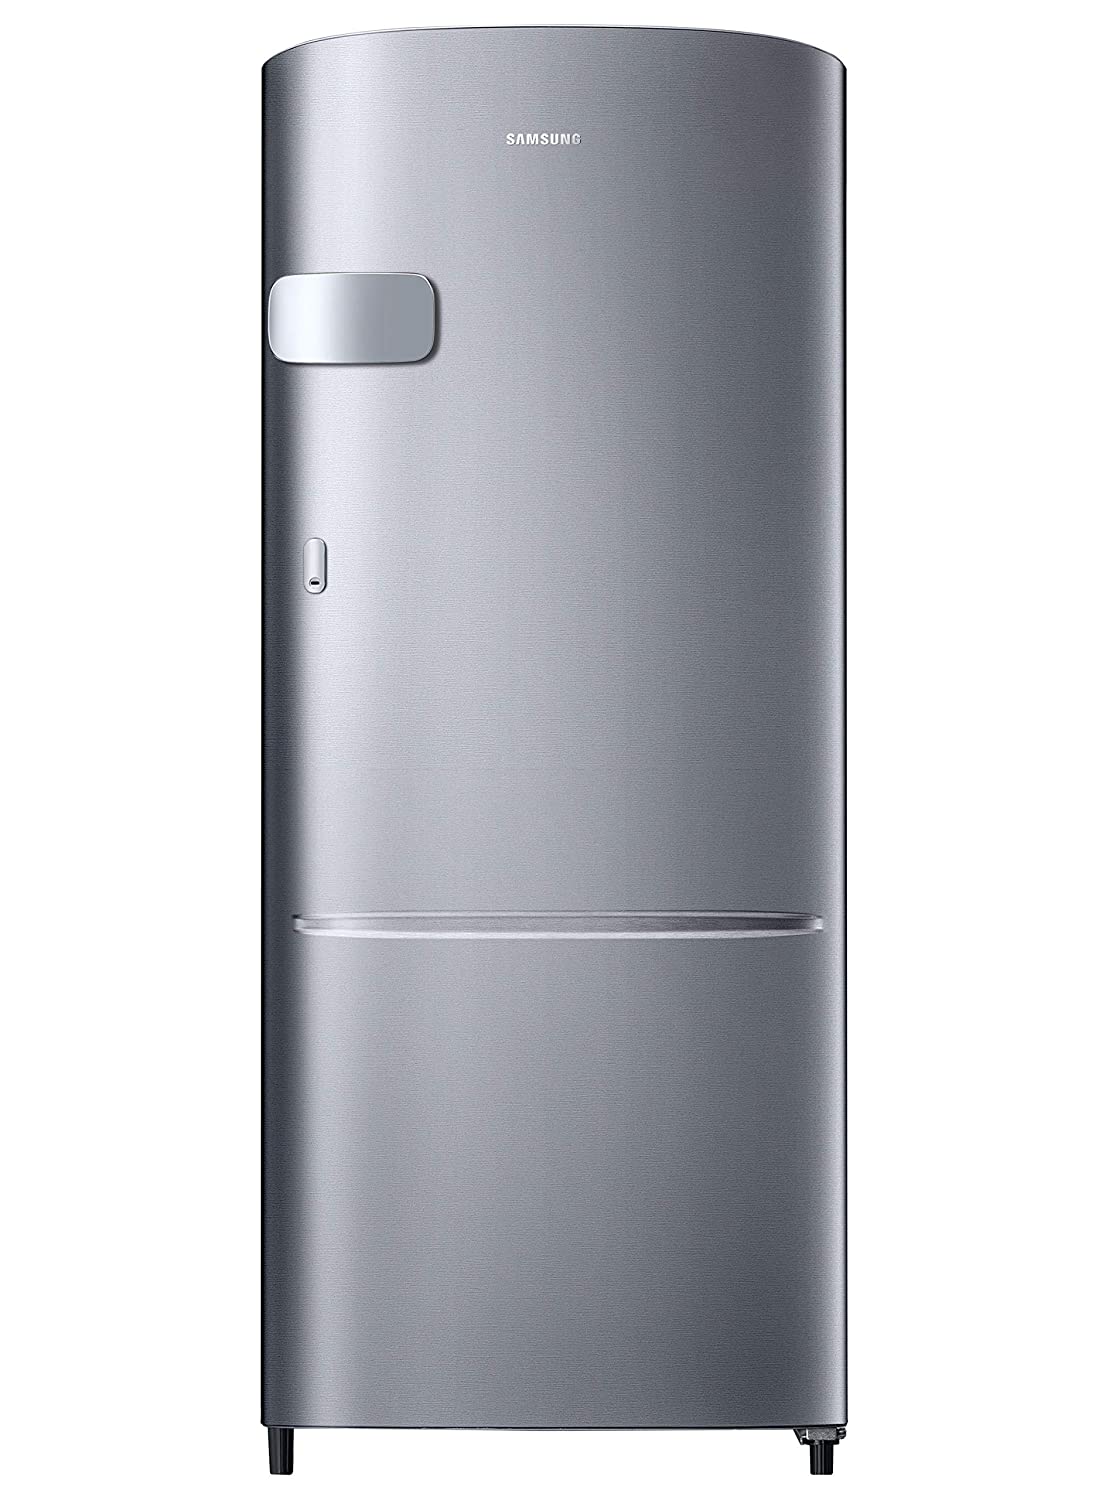 Samsung 192 L 2 Star Direct Cool Standard Single Door Refrigerator (RR20A1Y1BS8/HL, Elegant Inox, Silver)